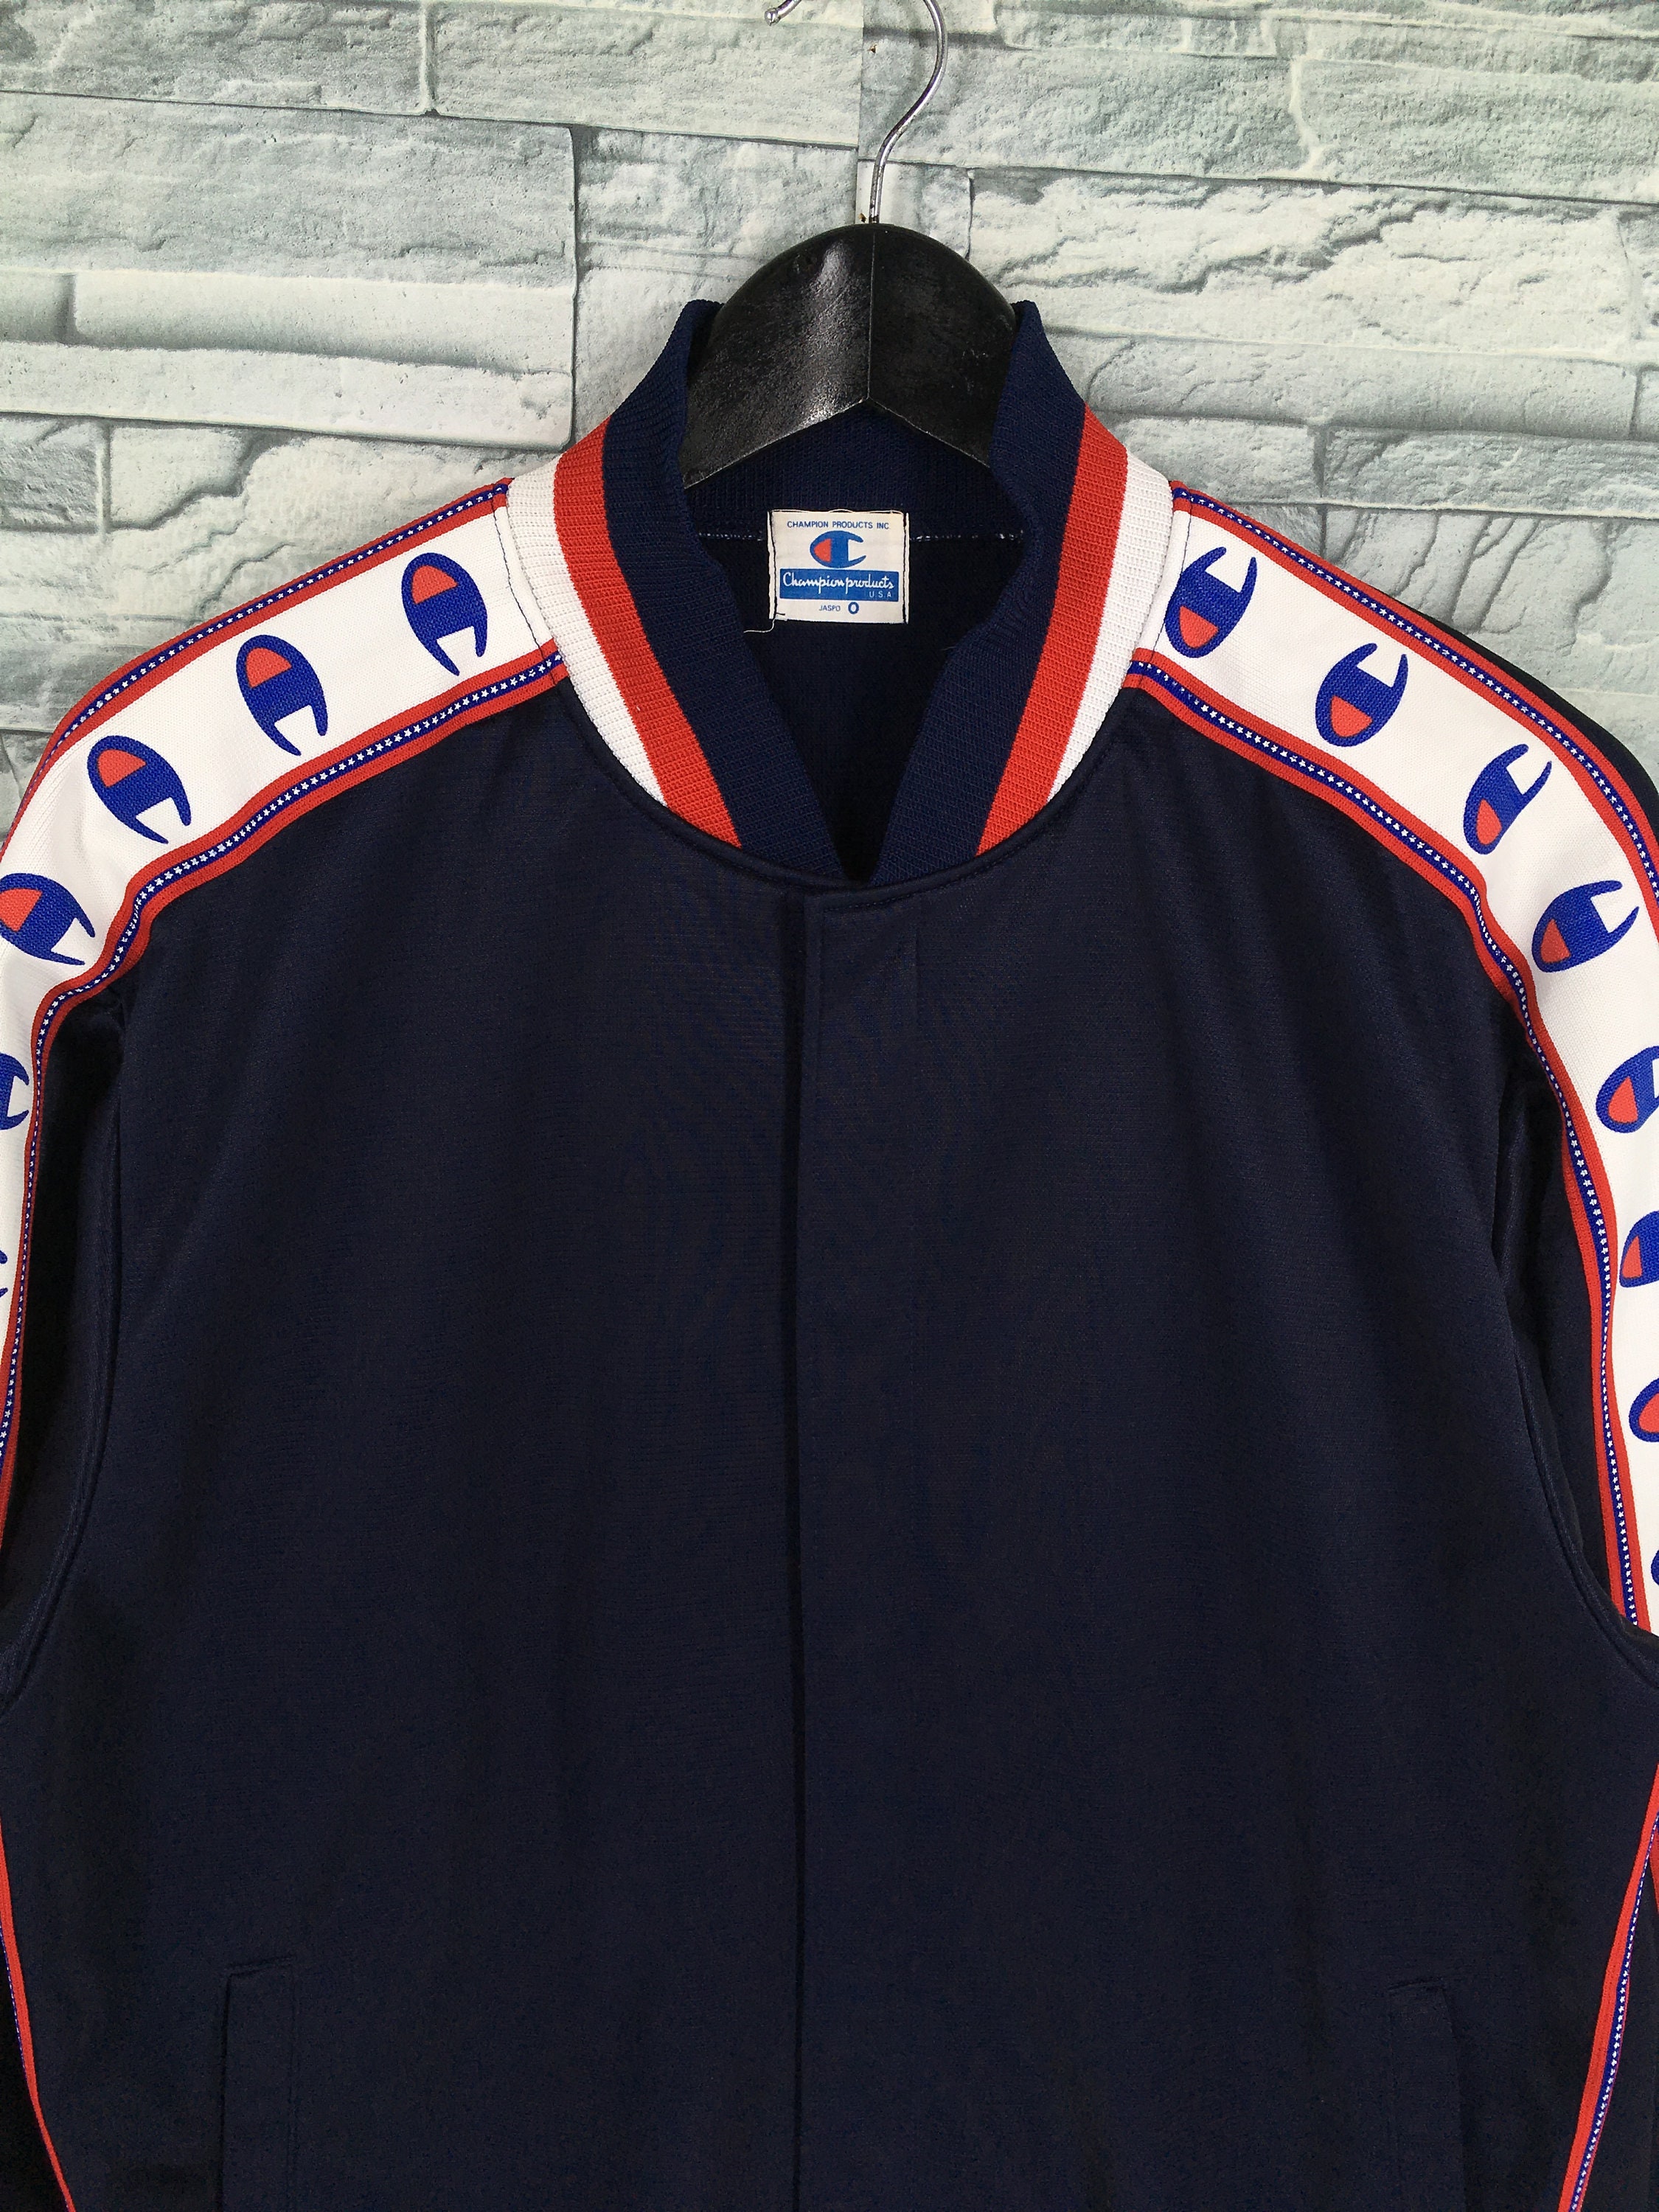 CHAMPION Jacket Windbreaker Medium Vintage 1990s Champion - Etsy